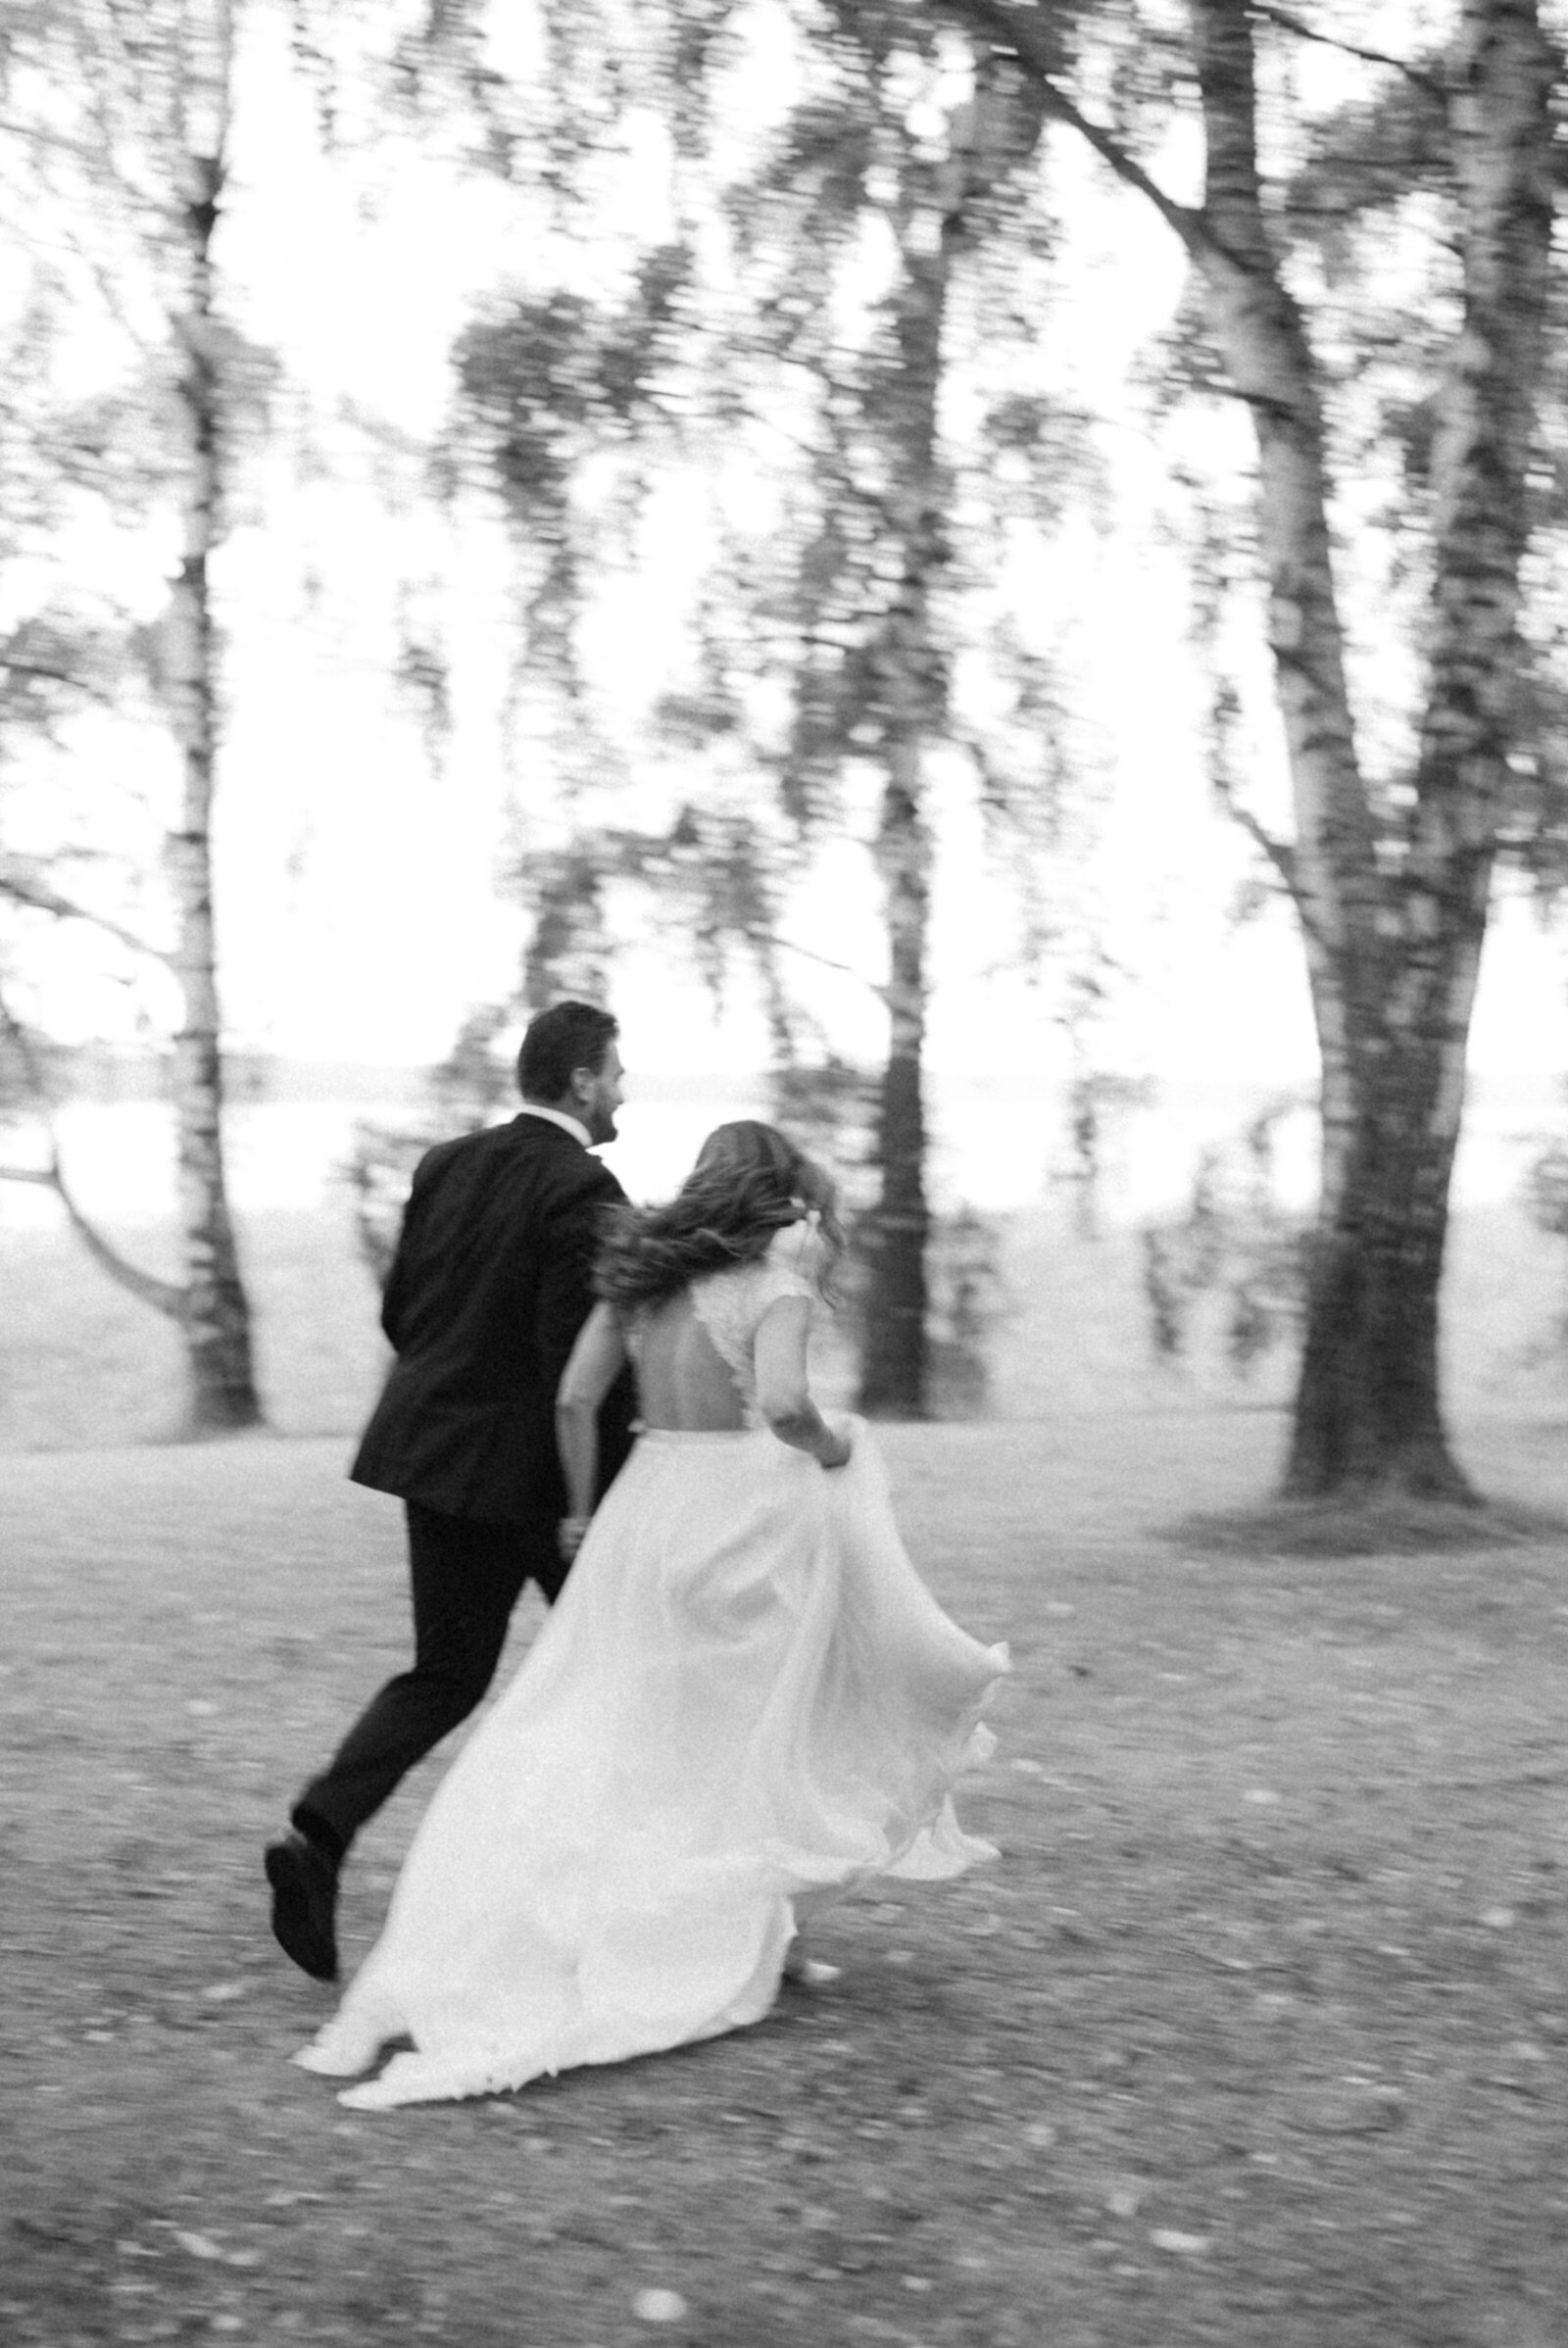 The wedding couple is running in a wedding photo by Finnish wedding photographer Hannika Gabrielsson.